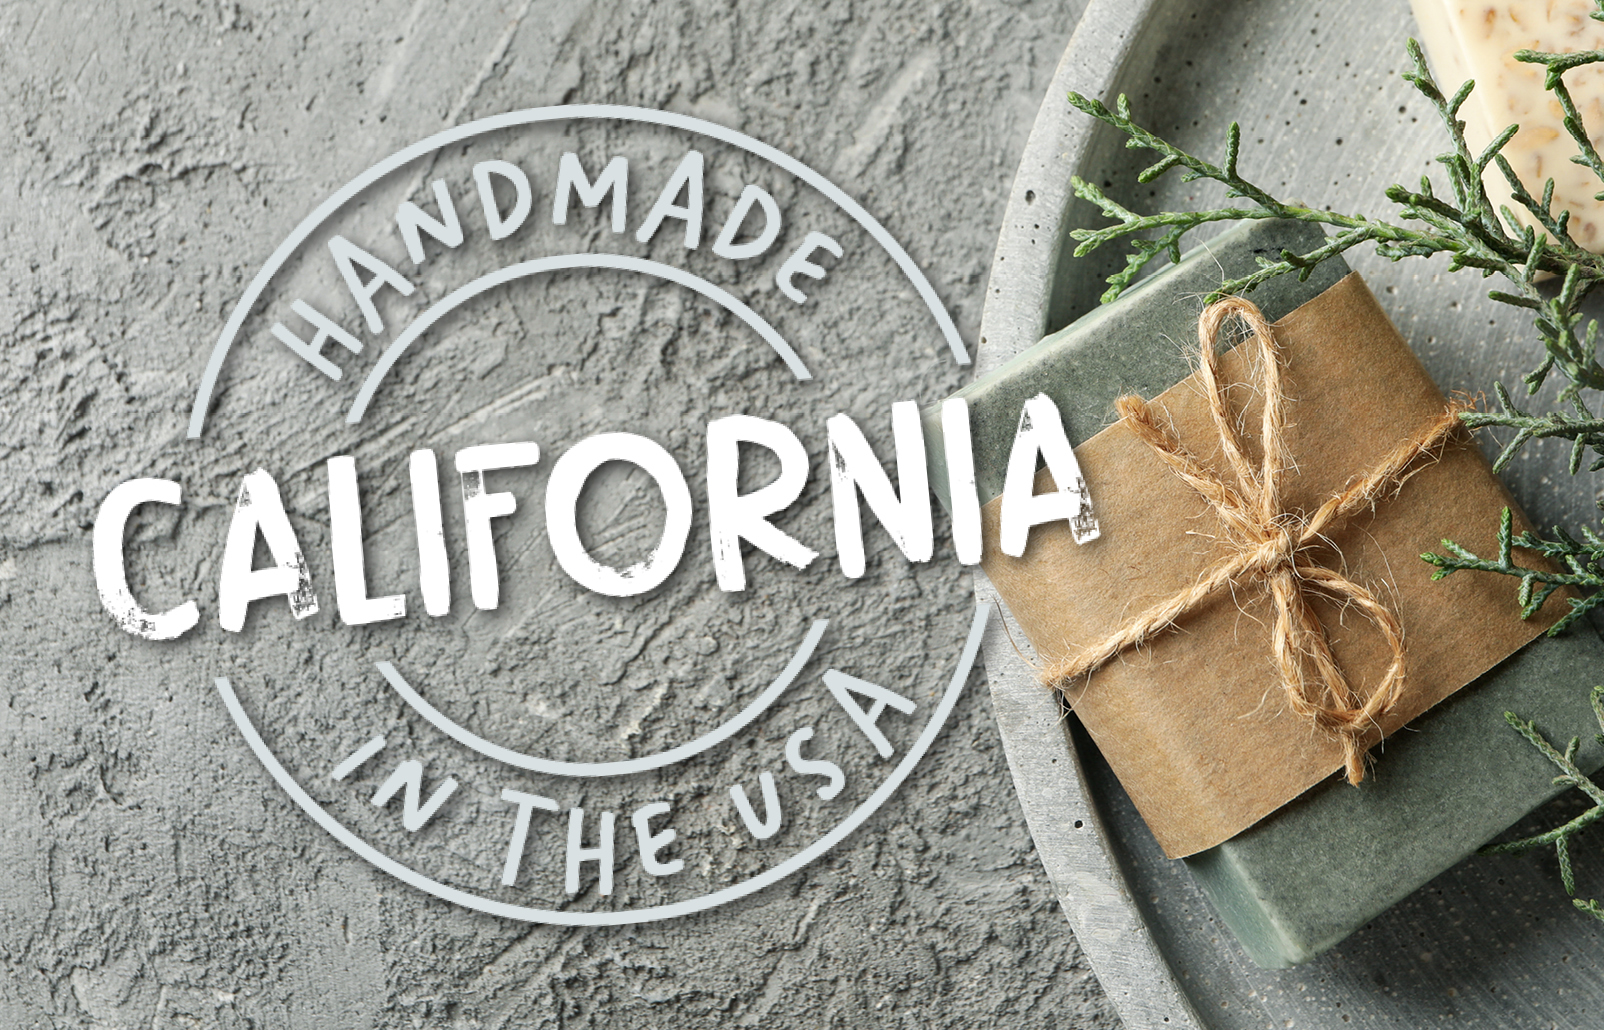 Shop Local: Handmade in California